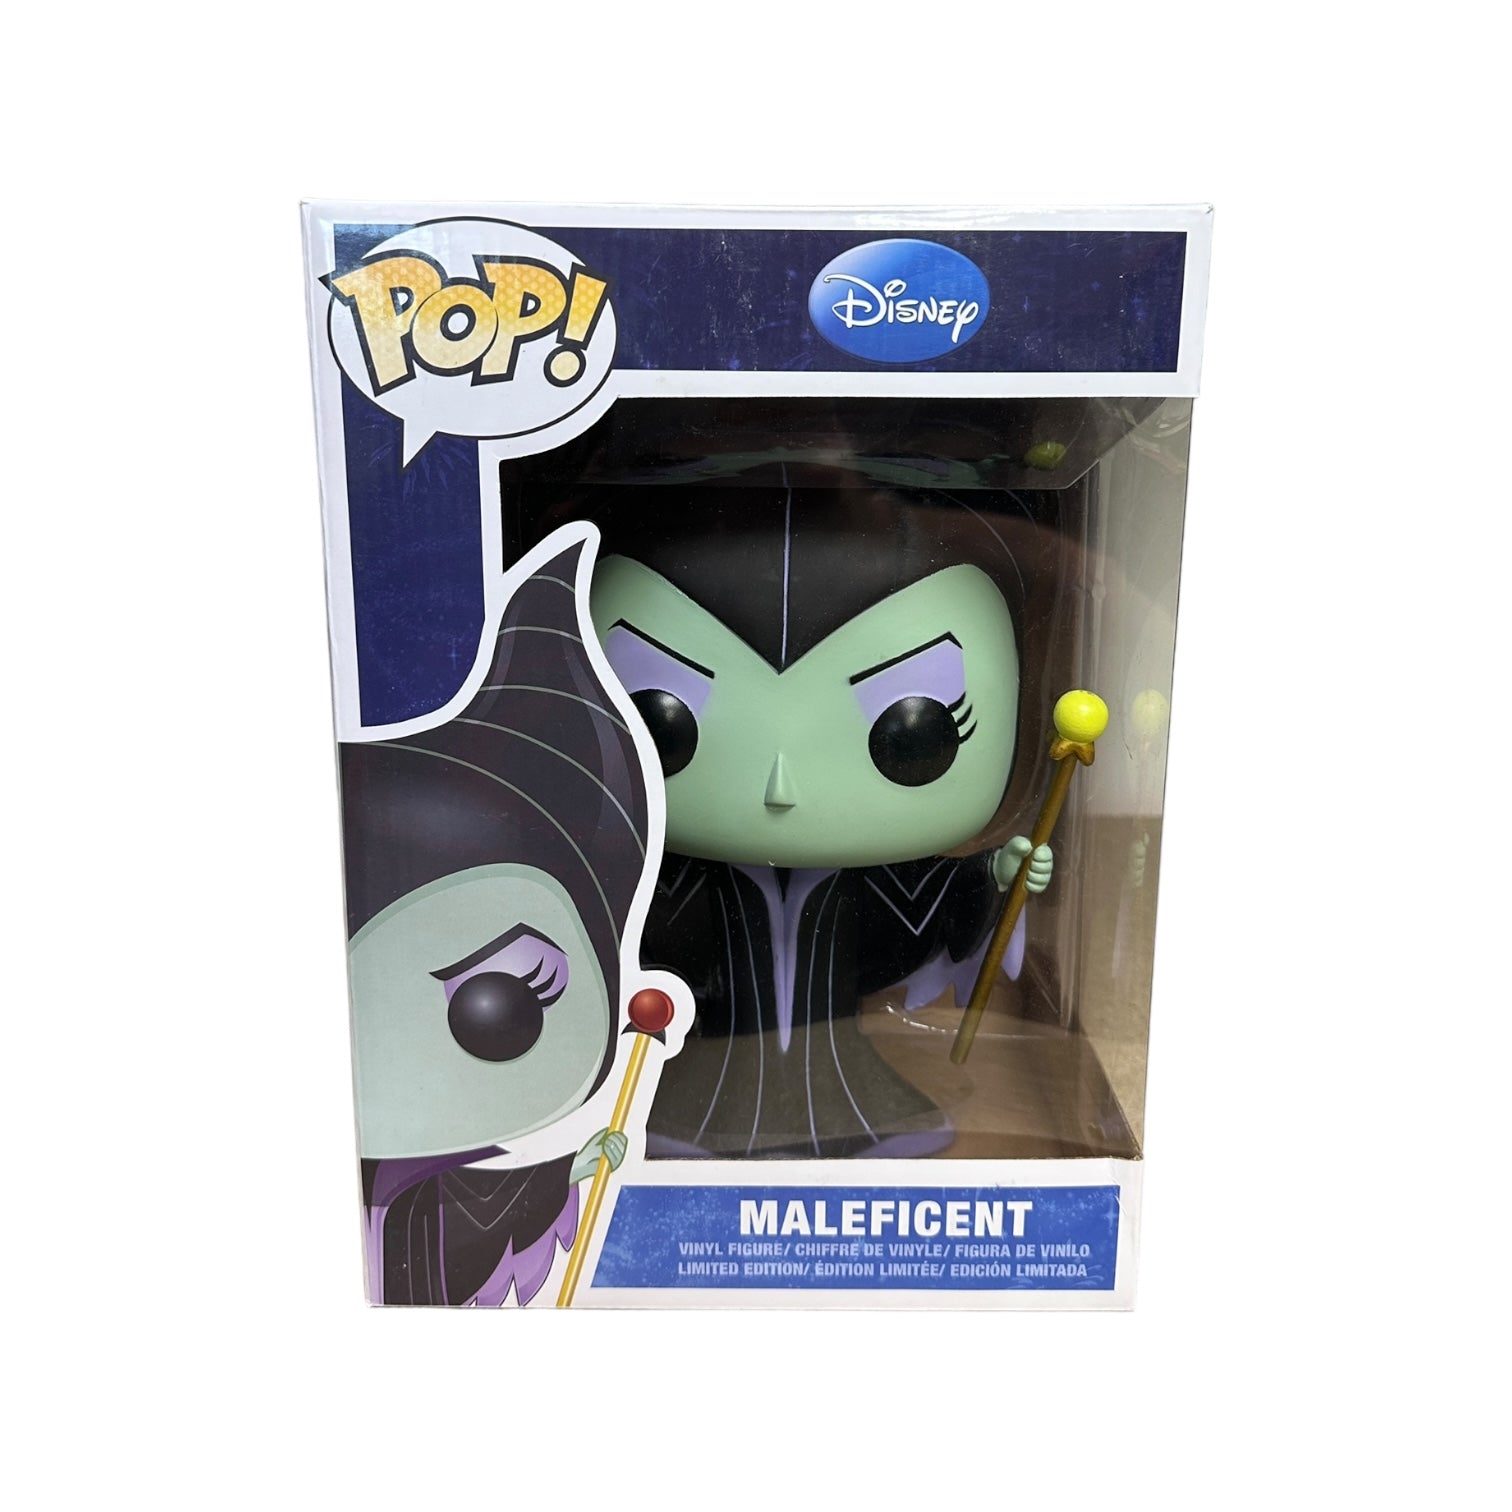 Maleficent 9" Funko Pop! - Disney - 2012 Pop! - Condition 6.5/10